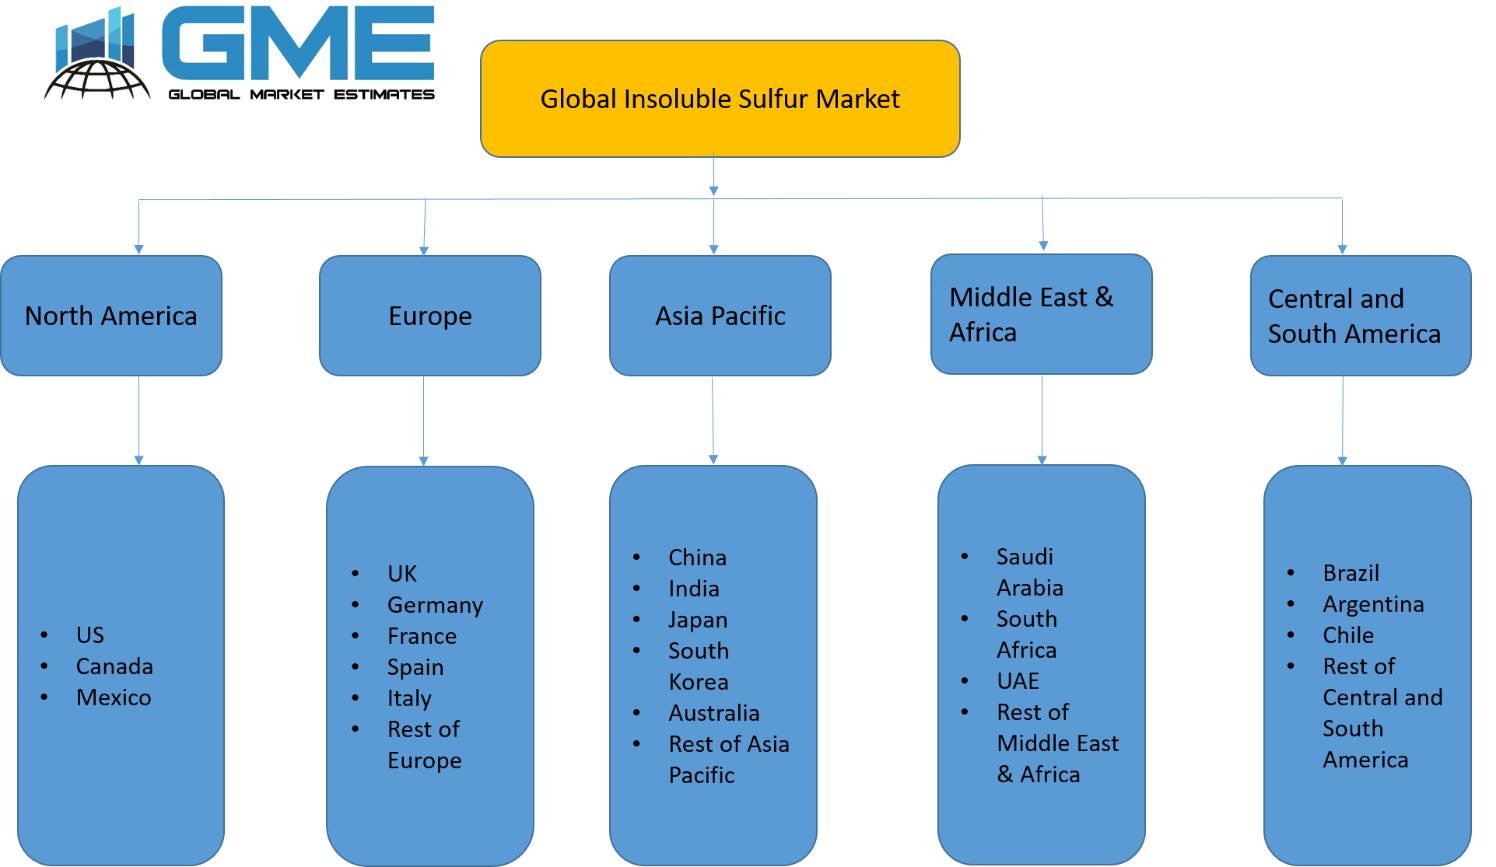 Insoluble Sulphur Market - Regional Analysis 